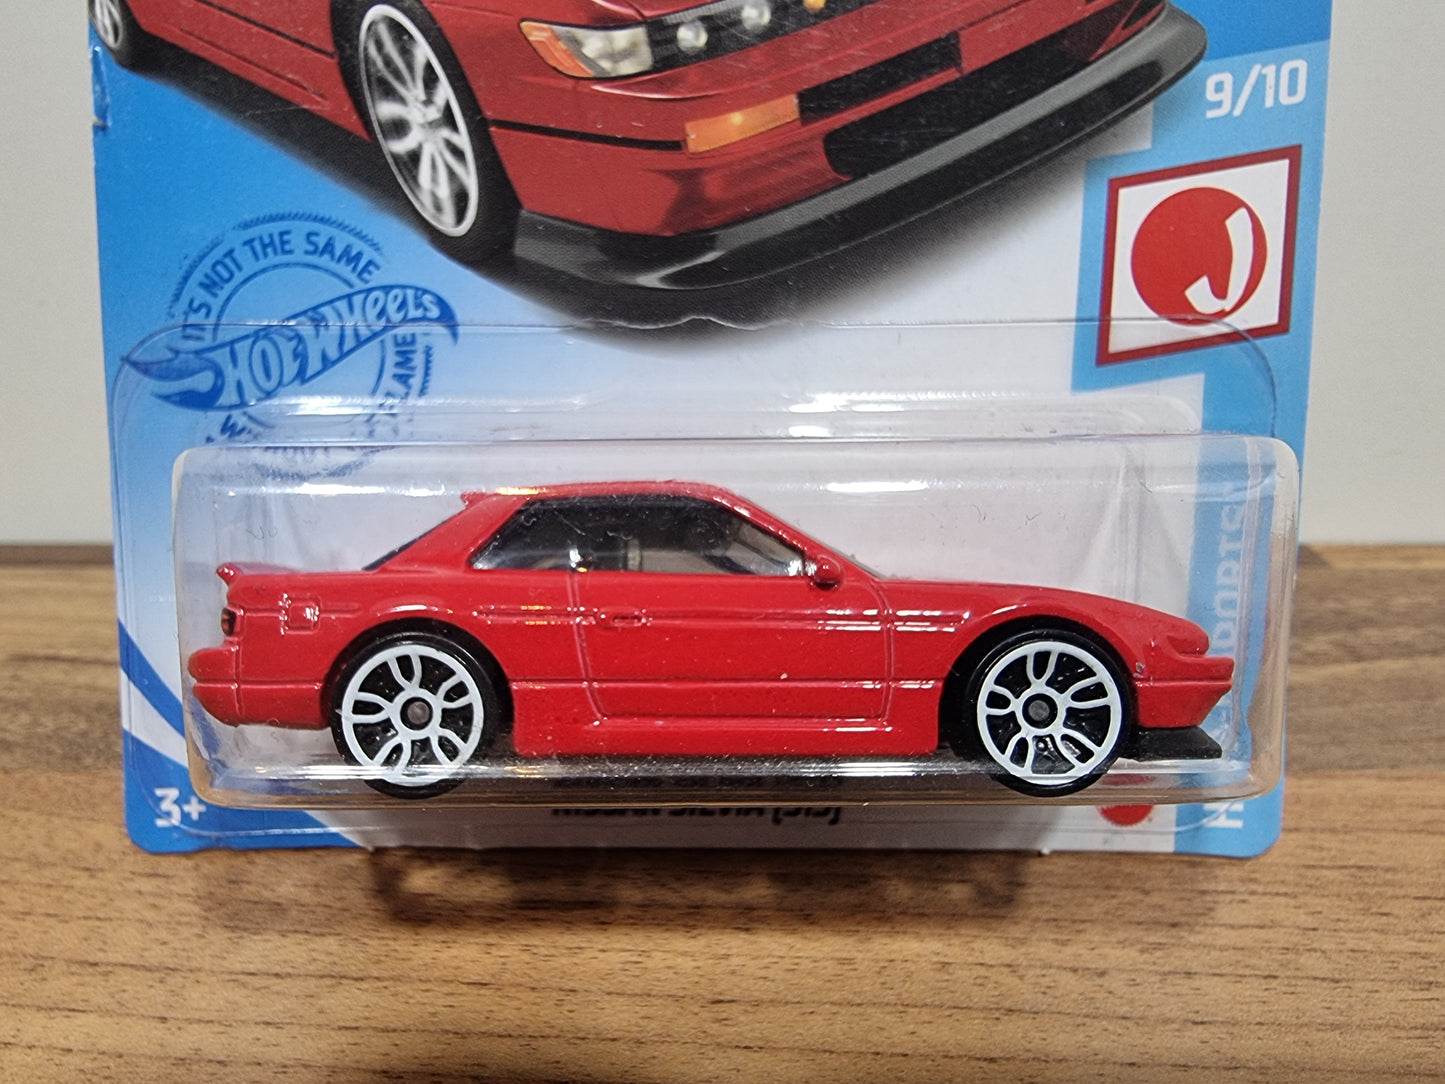 Hot Wheels Nissan Silvia S13 (Bad Card)